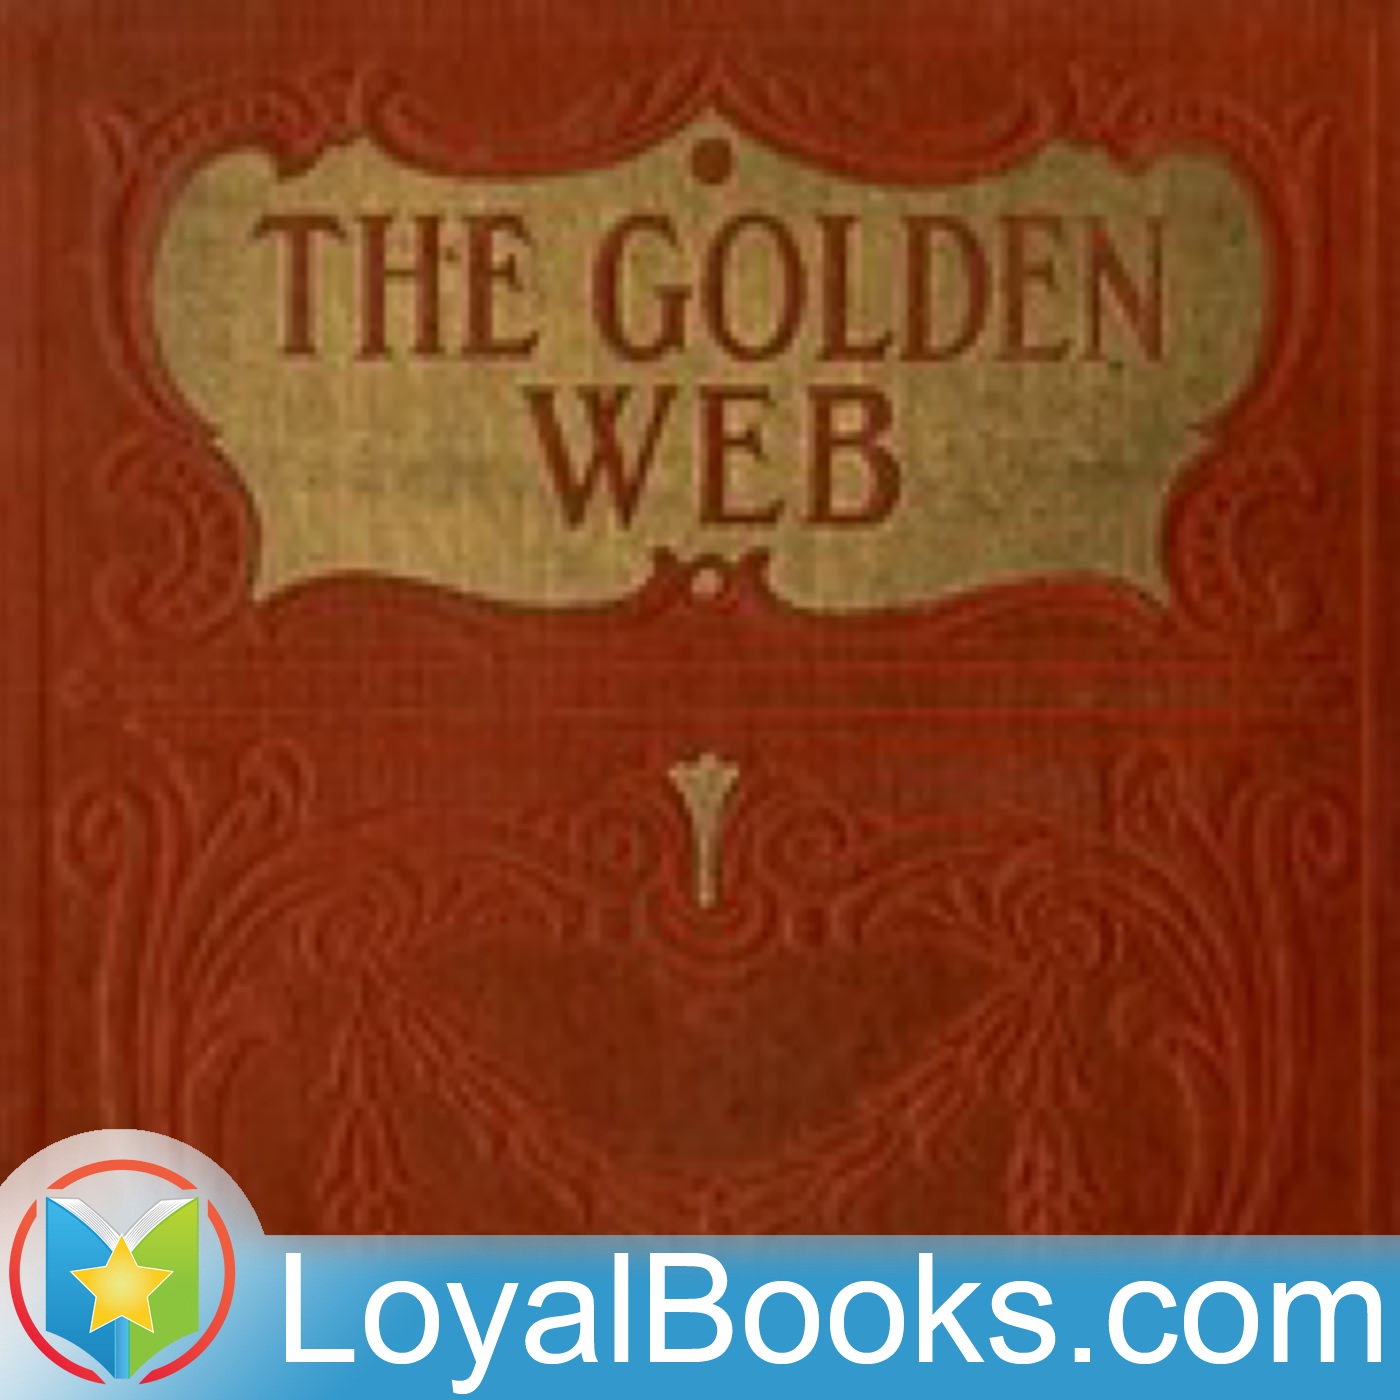 Golden Web by Edward Phillips Oppenheim